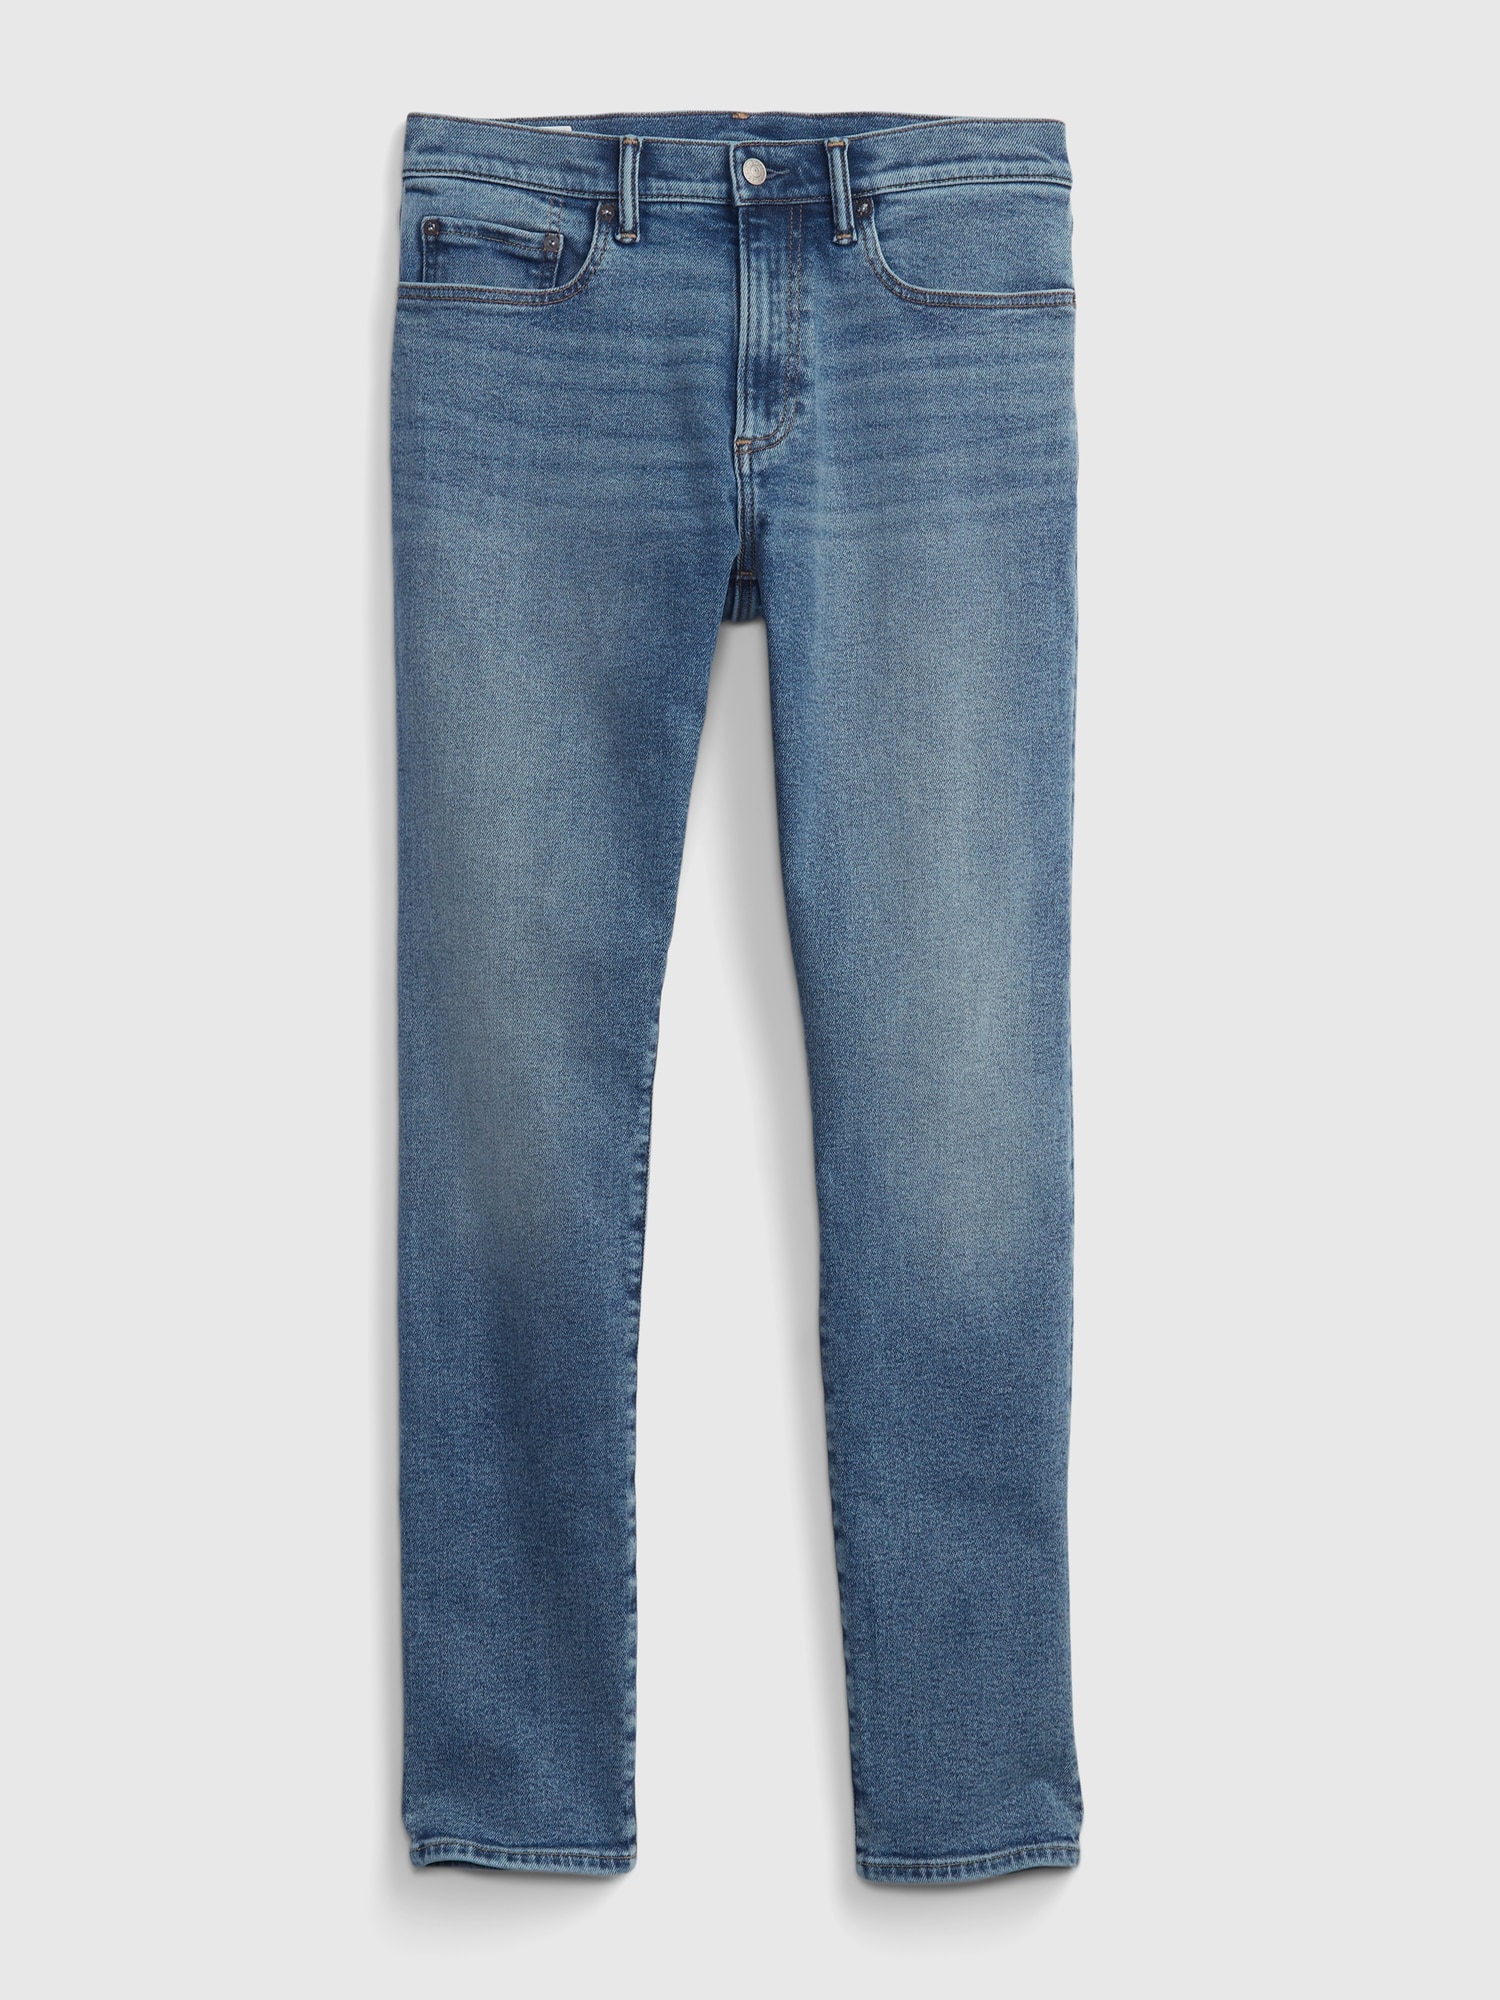 GapFlex Skinny Jeans - Men's